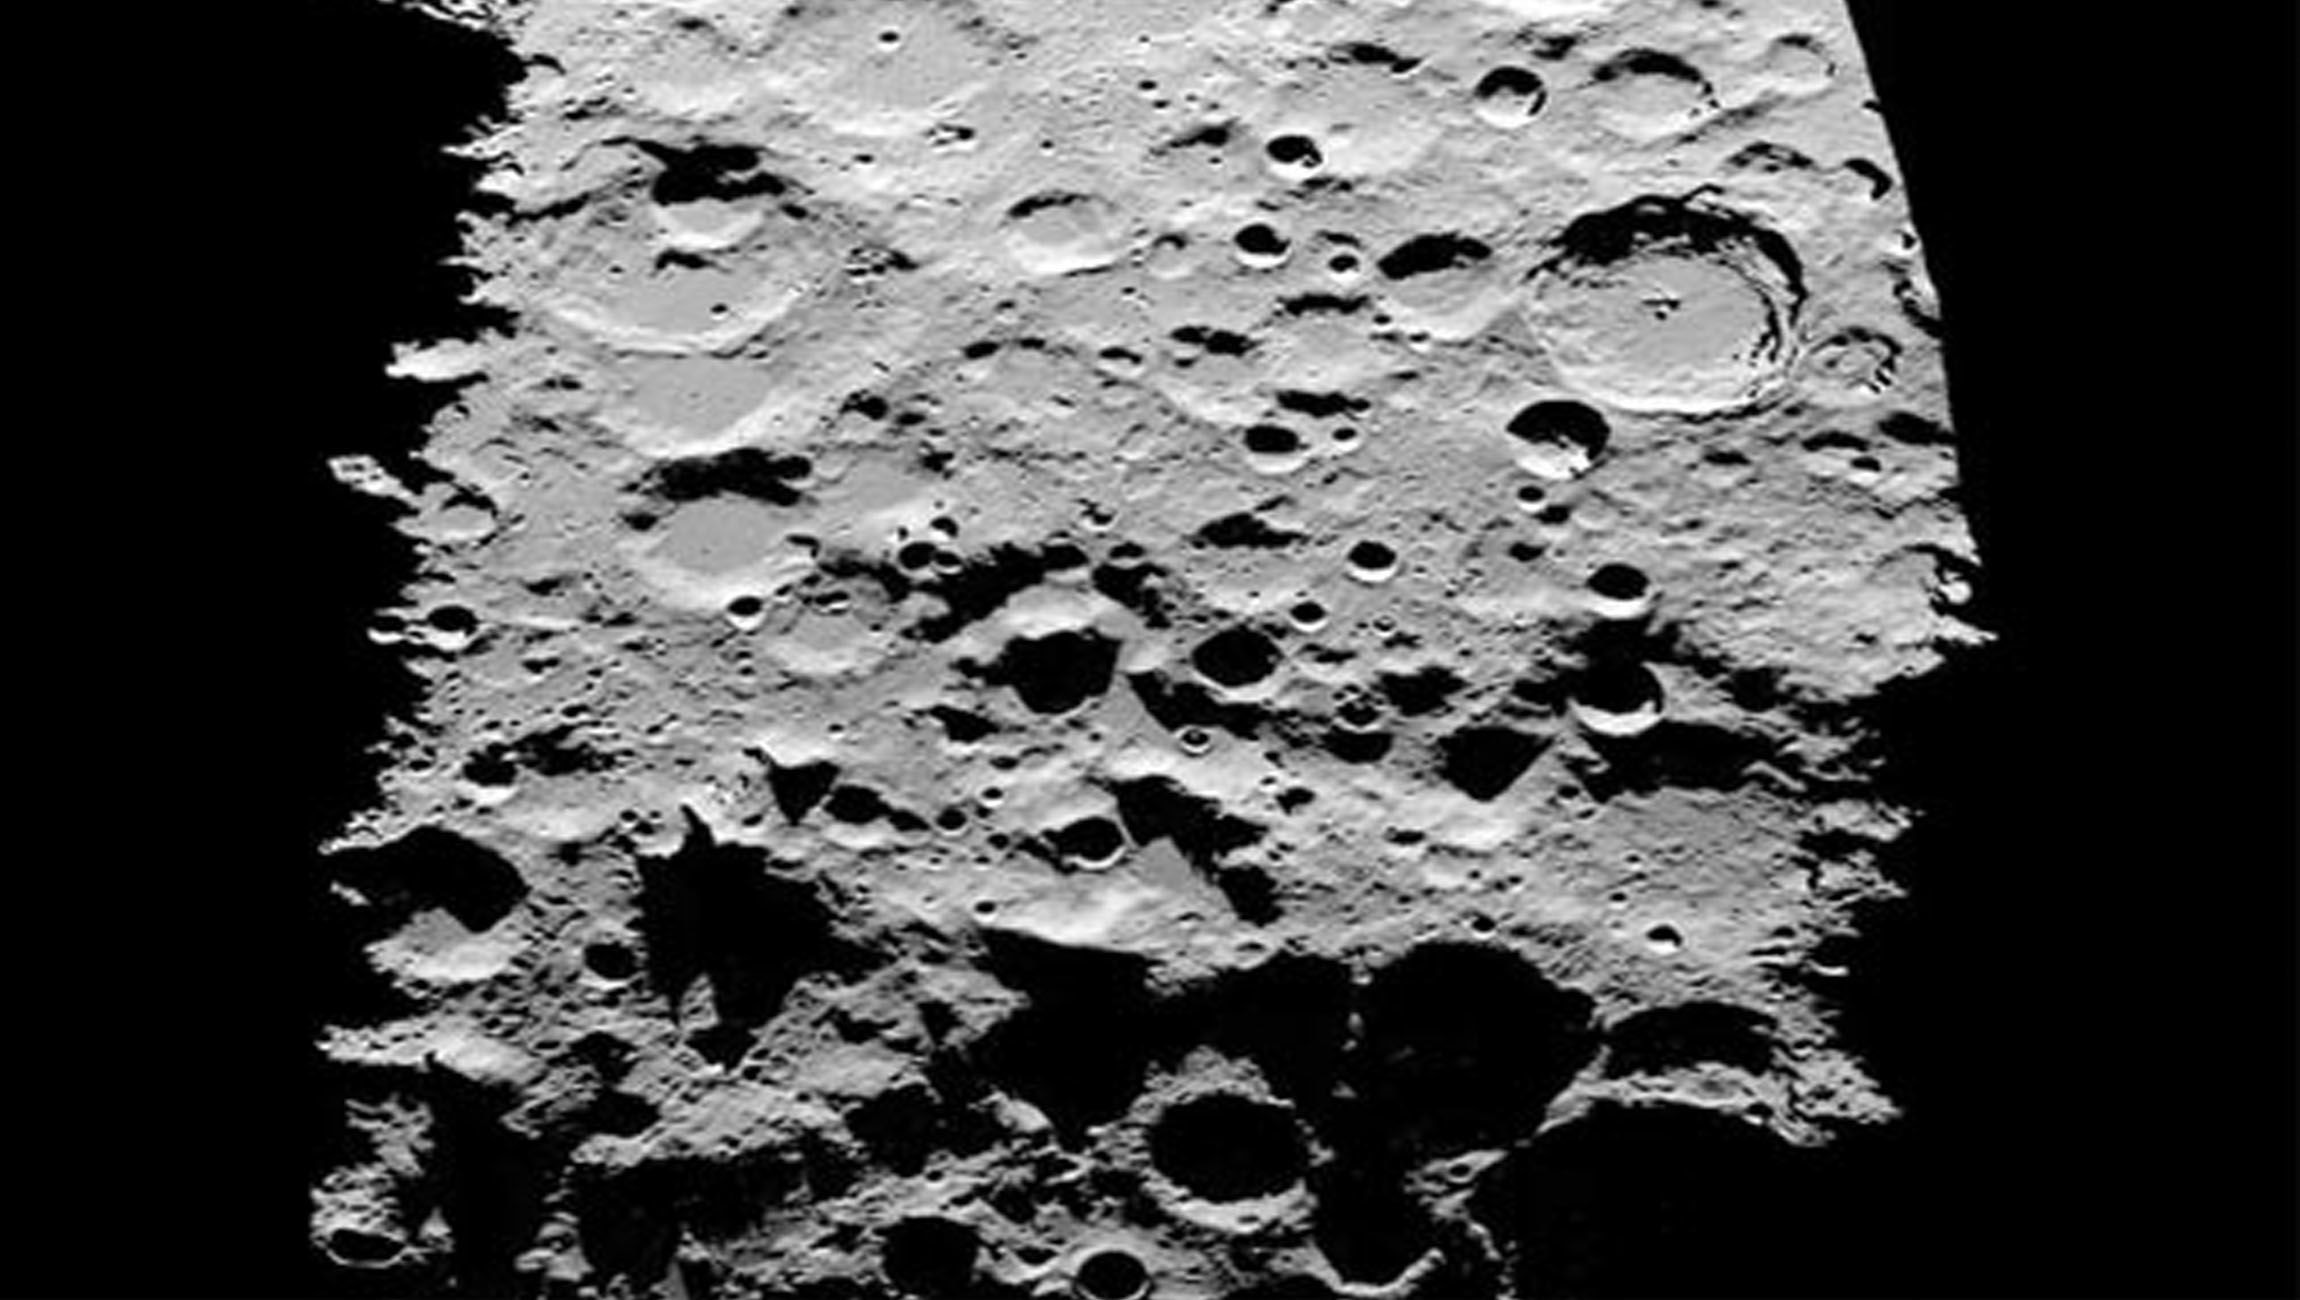 NASA image of the lunar south pole